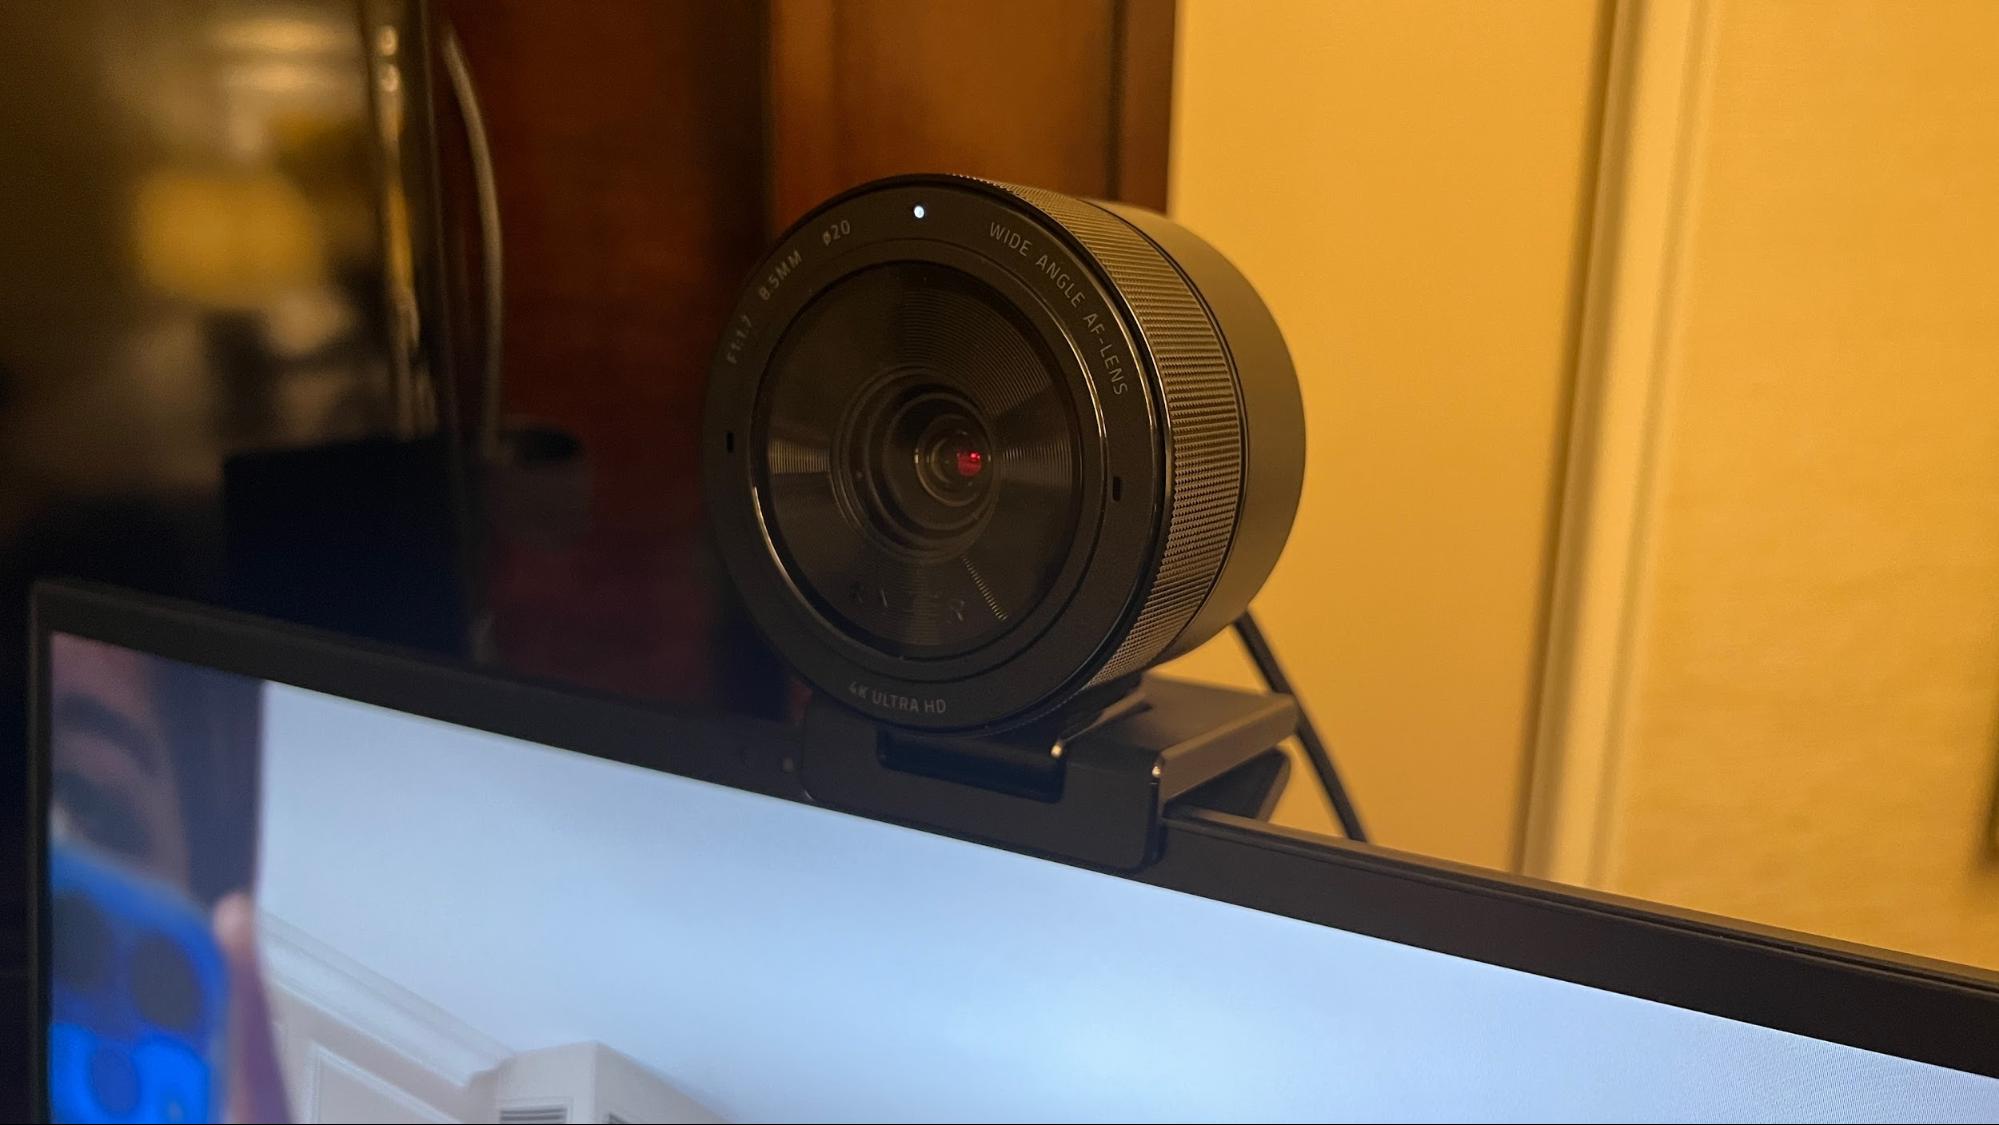 Largest Sensor Webcam - Razer Kiyo Pro Ultra